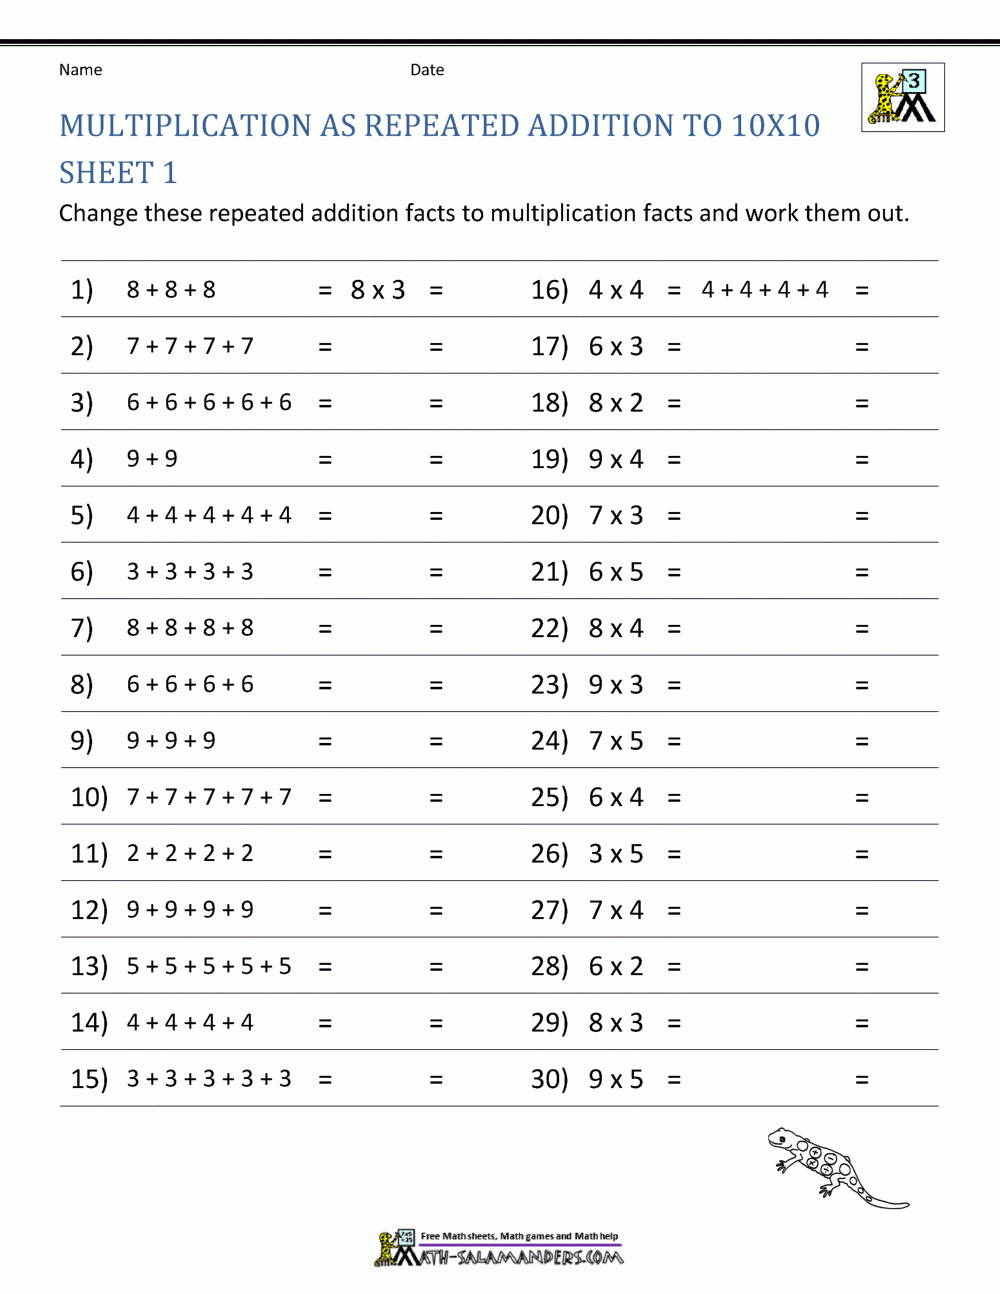 Multiplication Facts Worksheets - Understanding intended for Free Printable Multiplication Facts Quiz